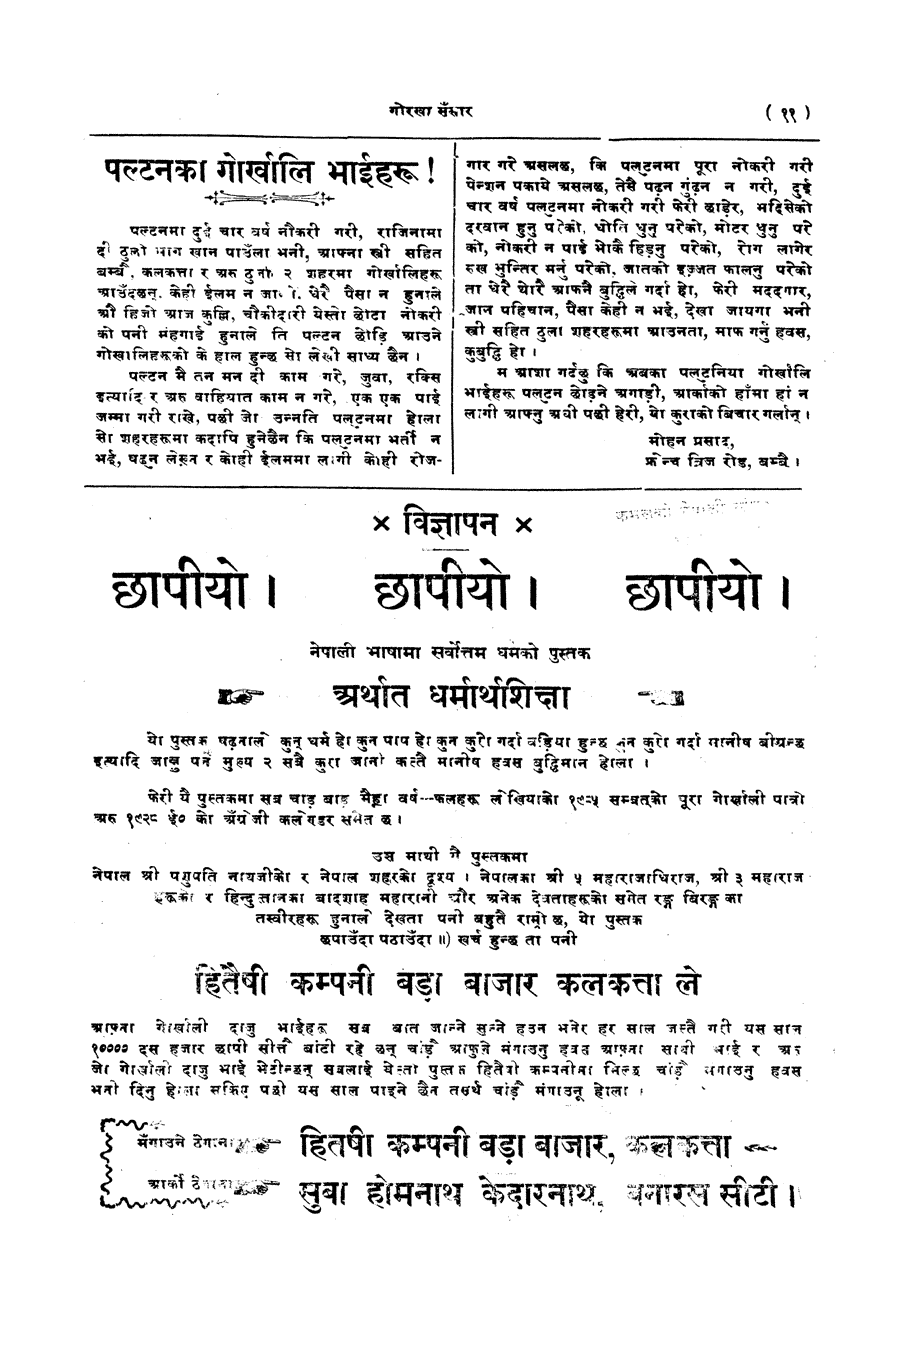 Gorkha Sansar, 6 Mar 1928, page 11